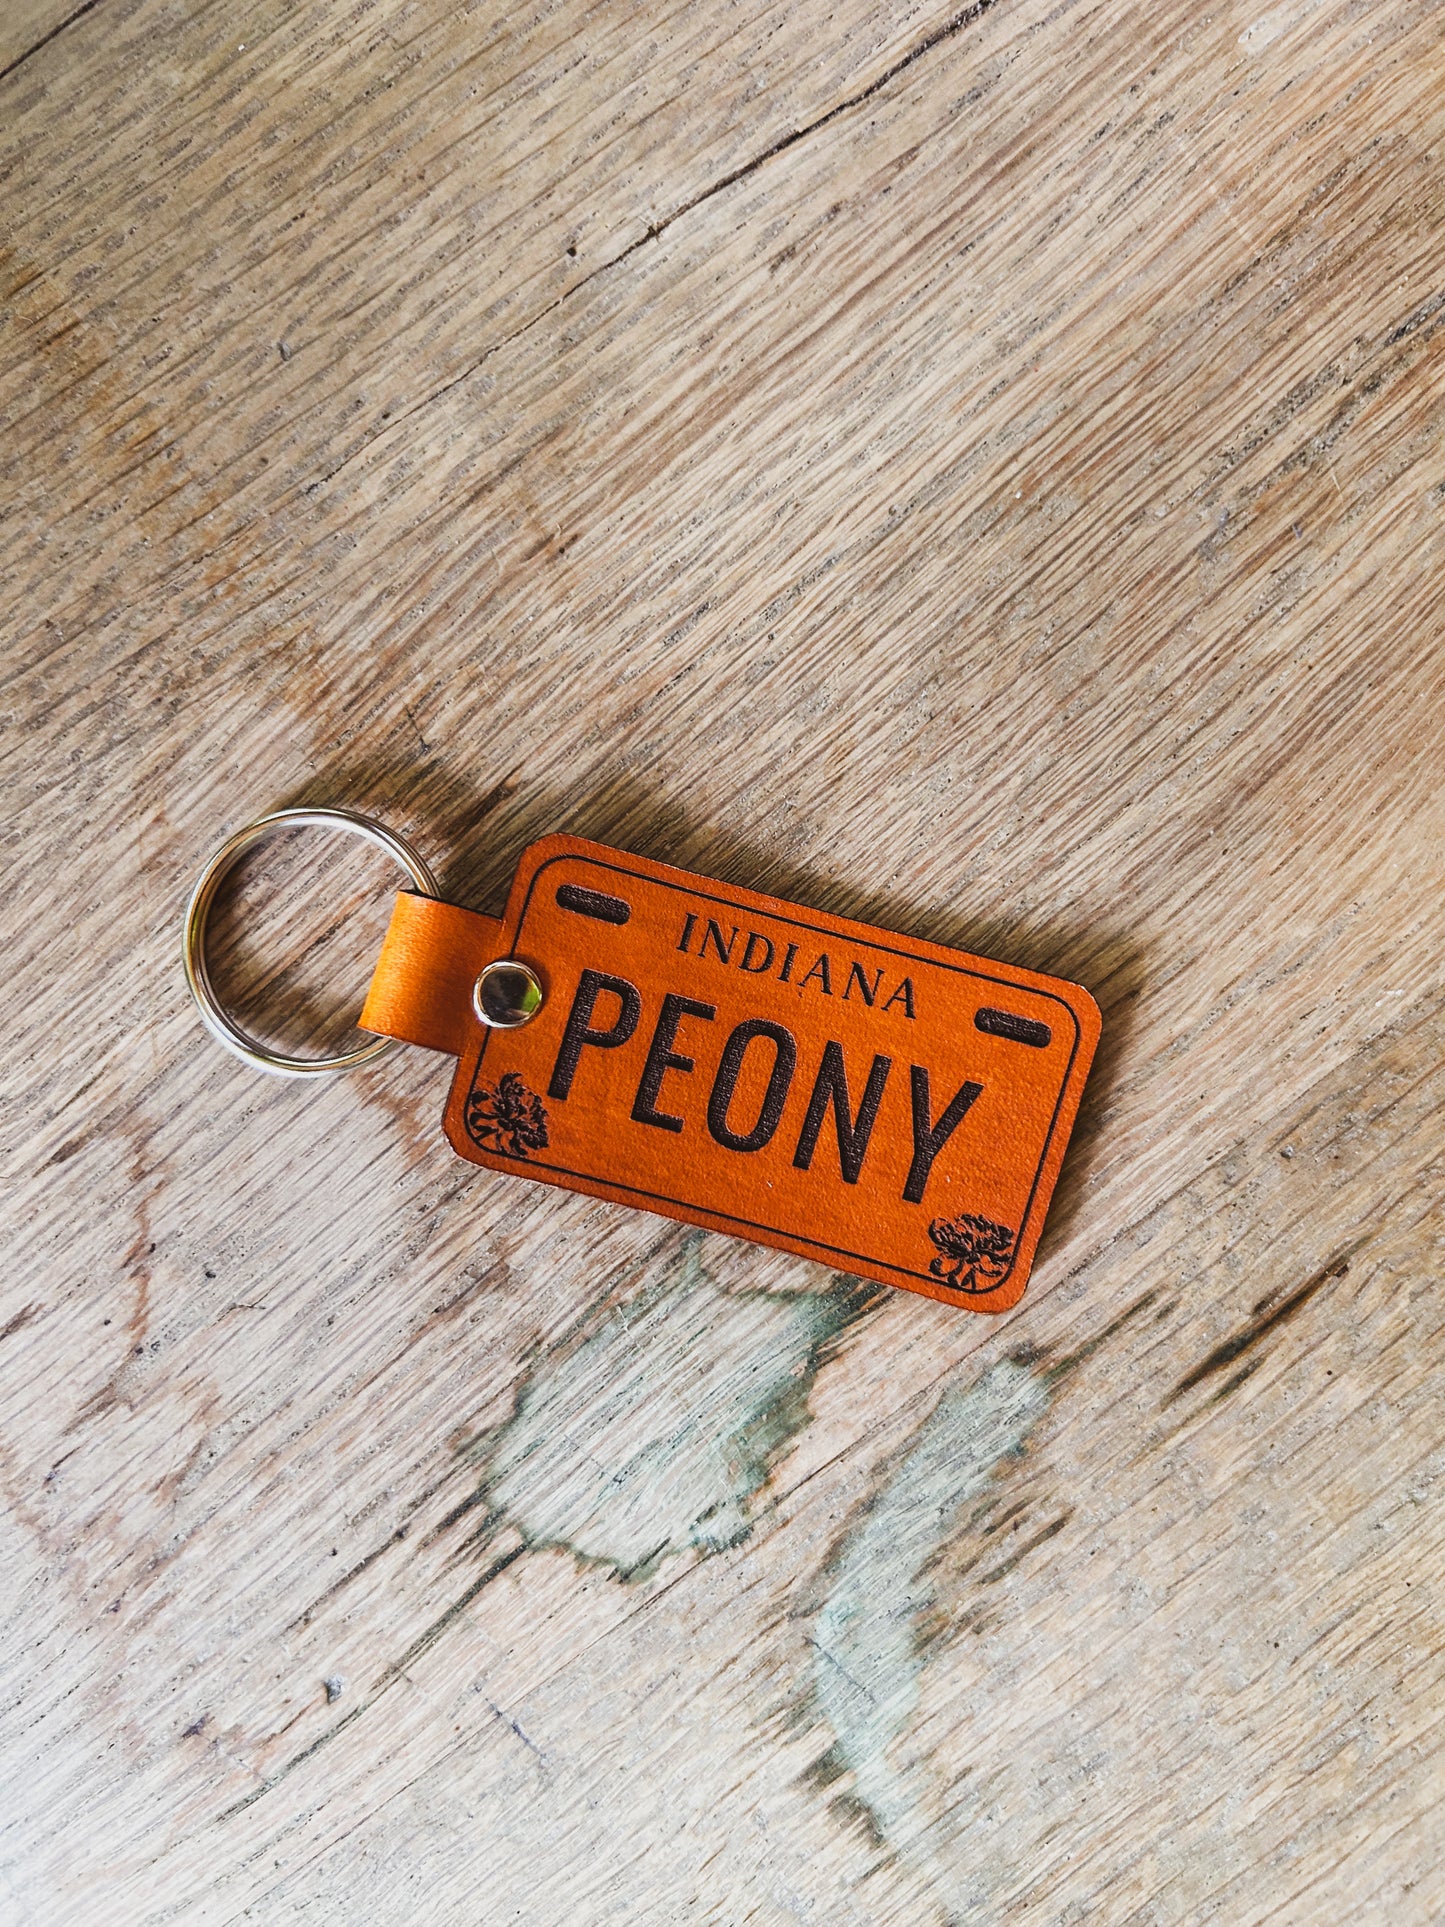 Indiana Peony License Plate Keychain